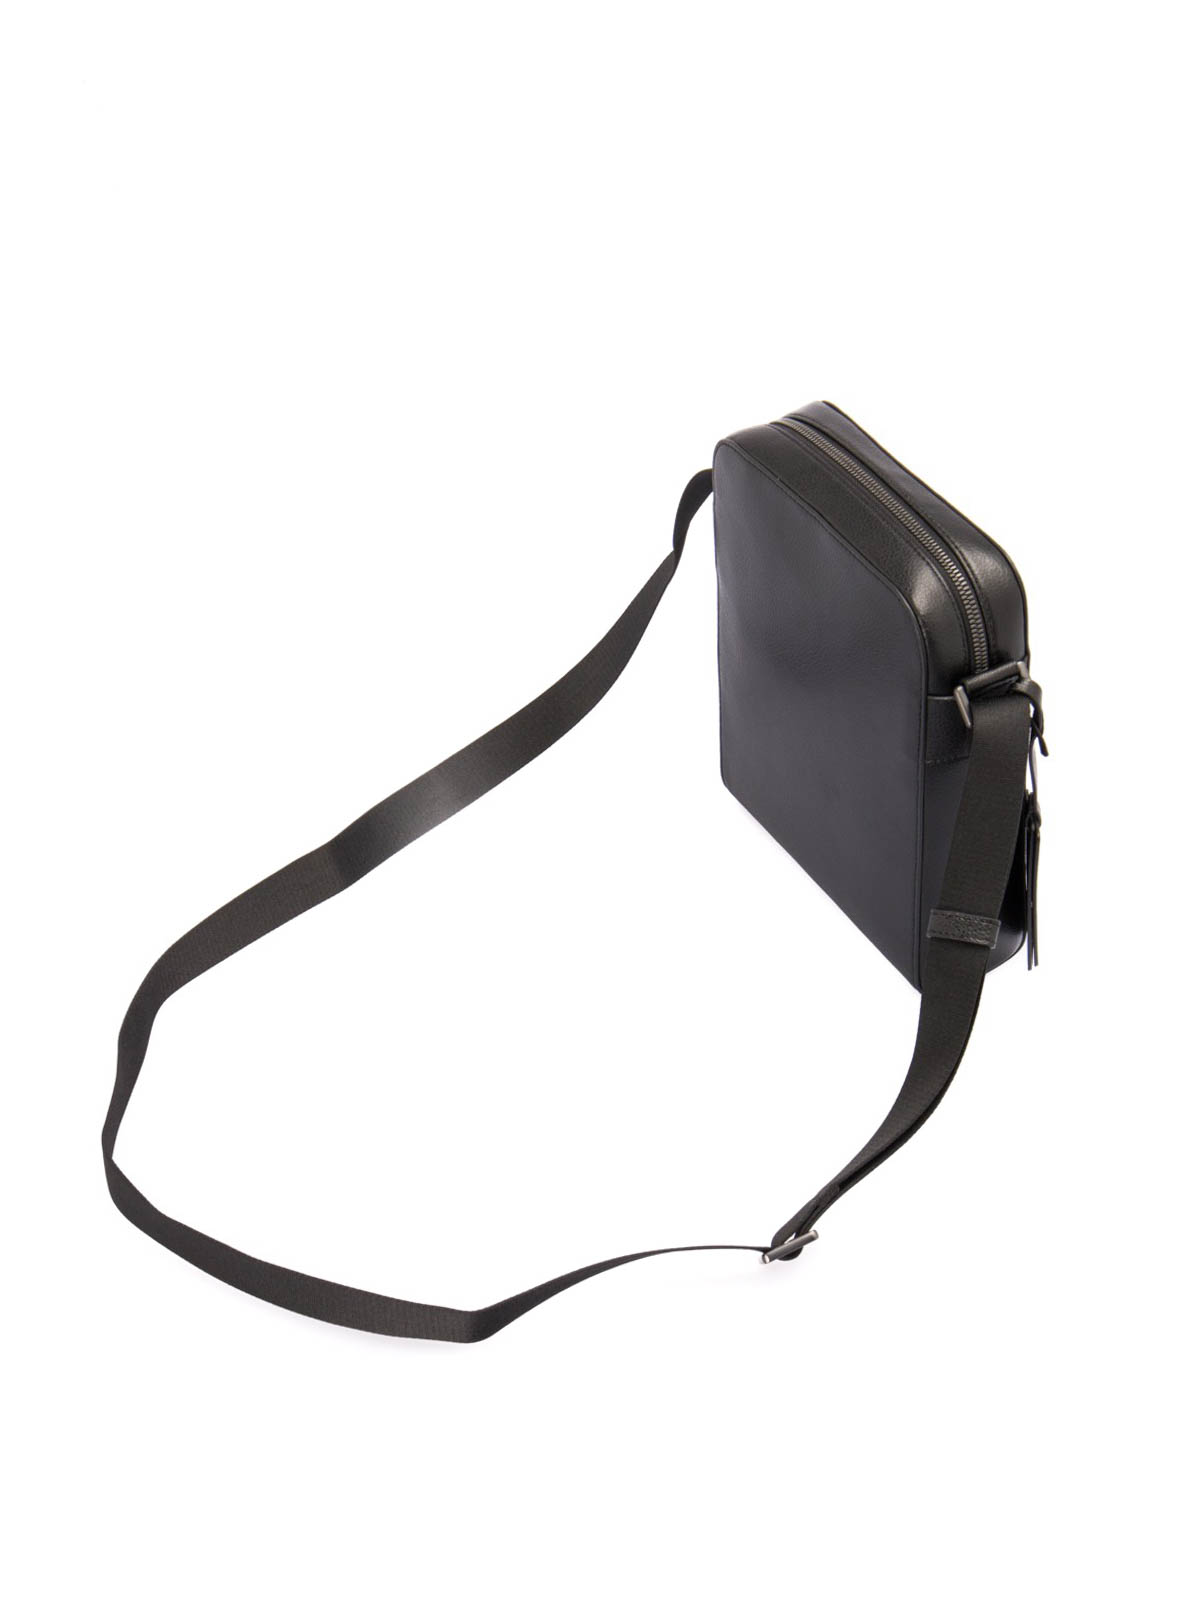 Emporio Armani Logo Leather Crossbody Bag in Black for Men